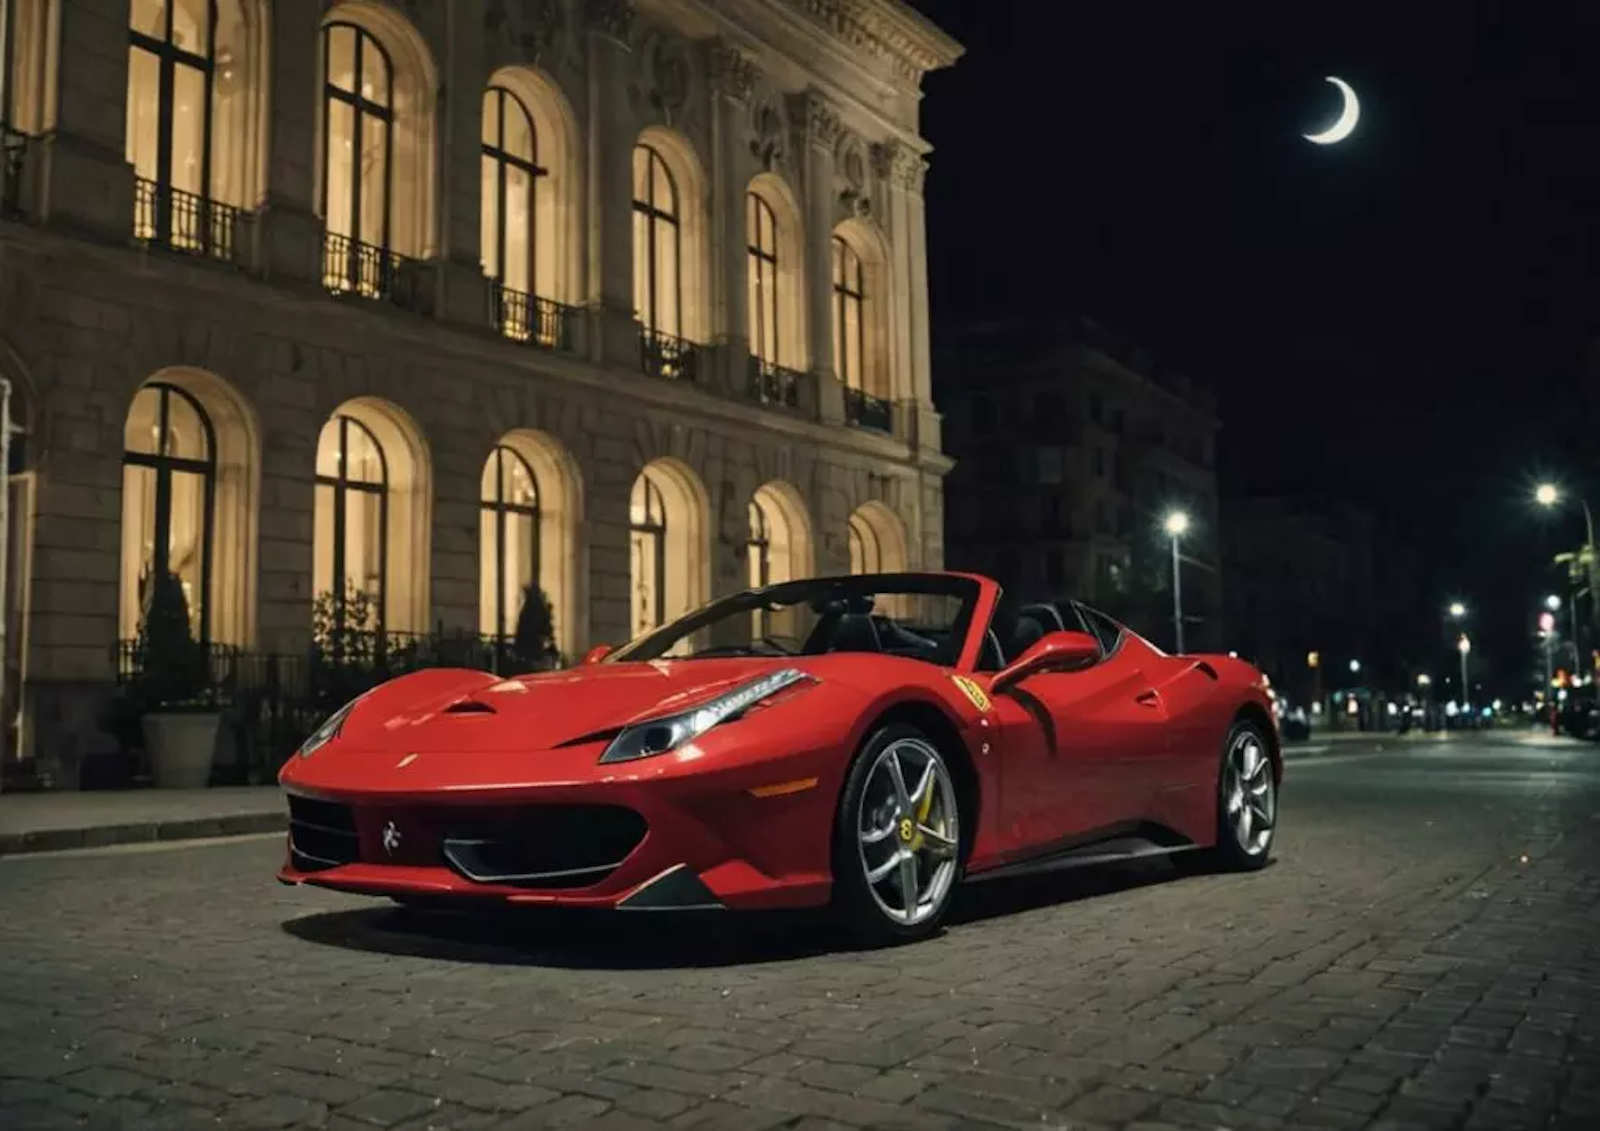 Celebrities Included In Ferraris Infamous Blacklist